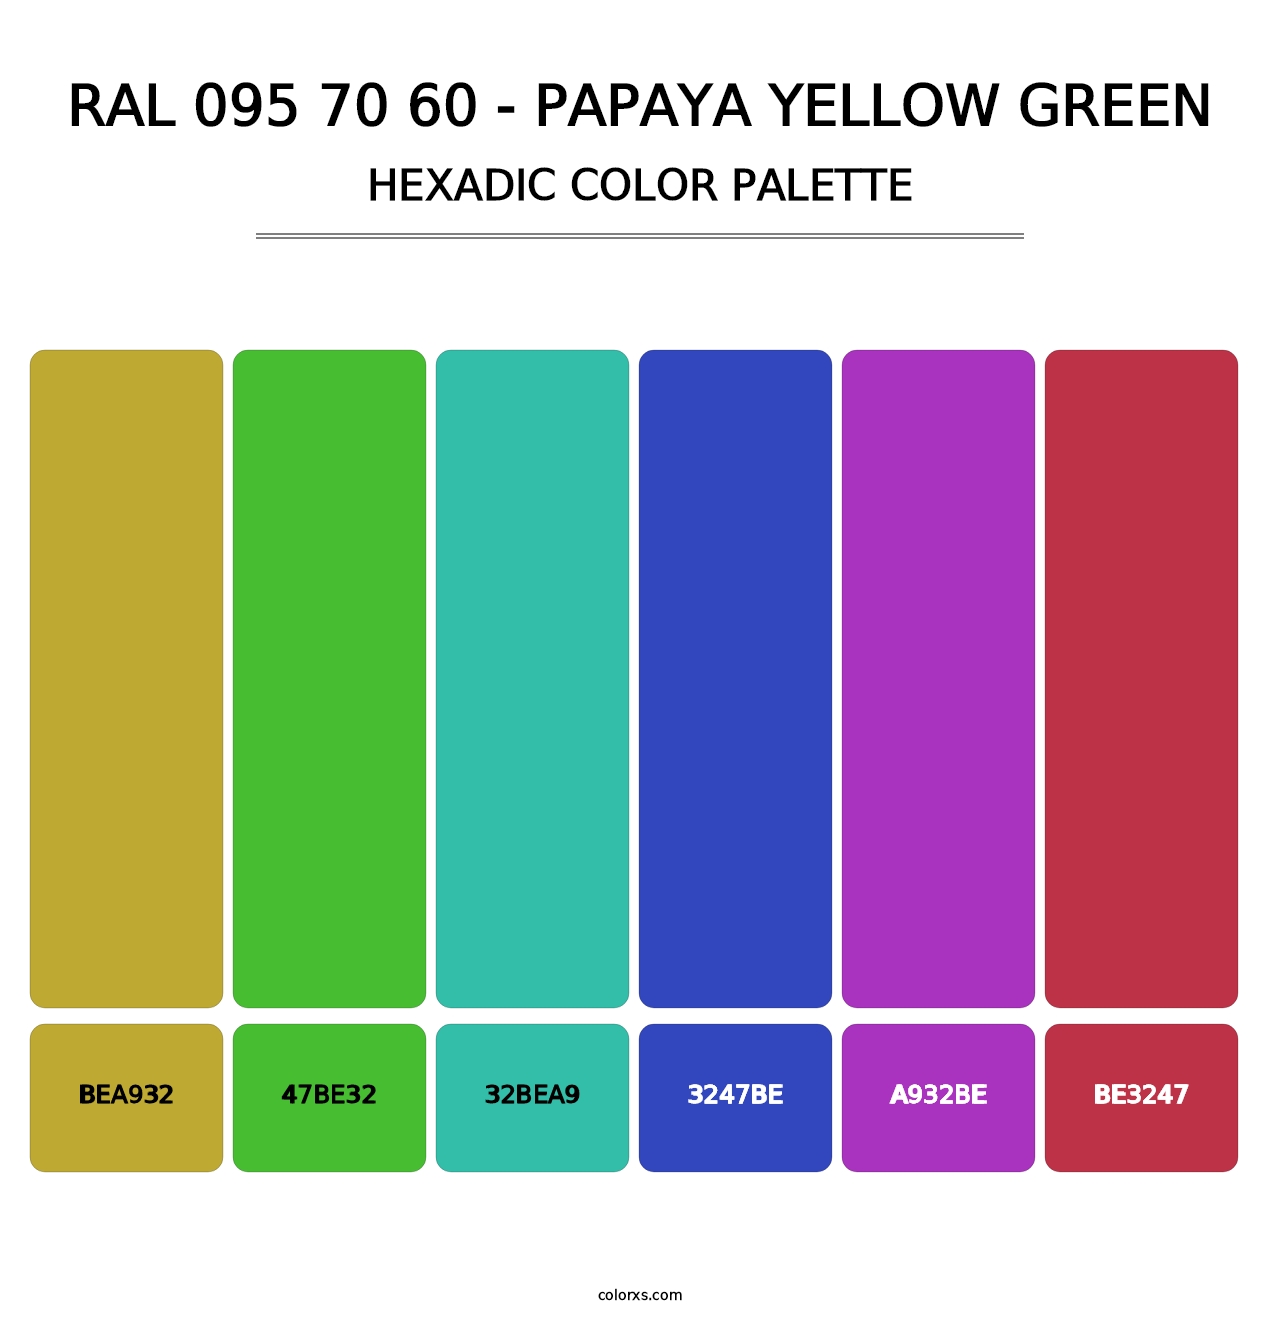 RAL 095 70 60 - Papaya Yellow Green - Hexadic Color Palette